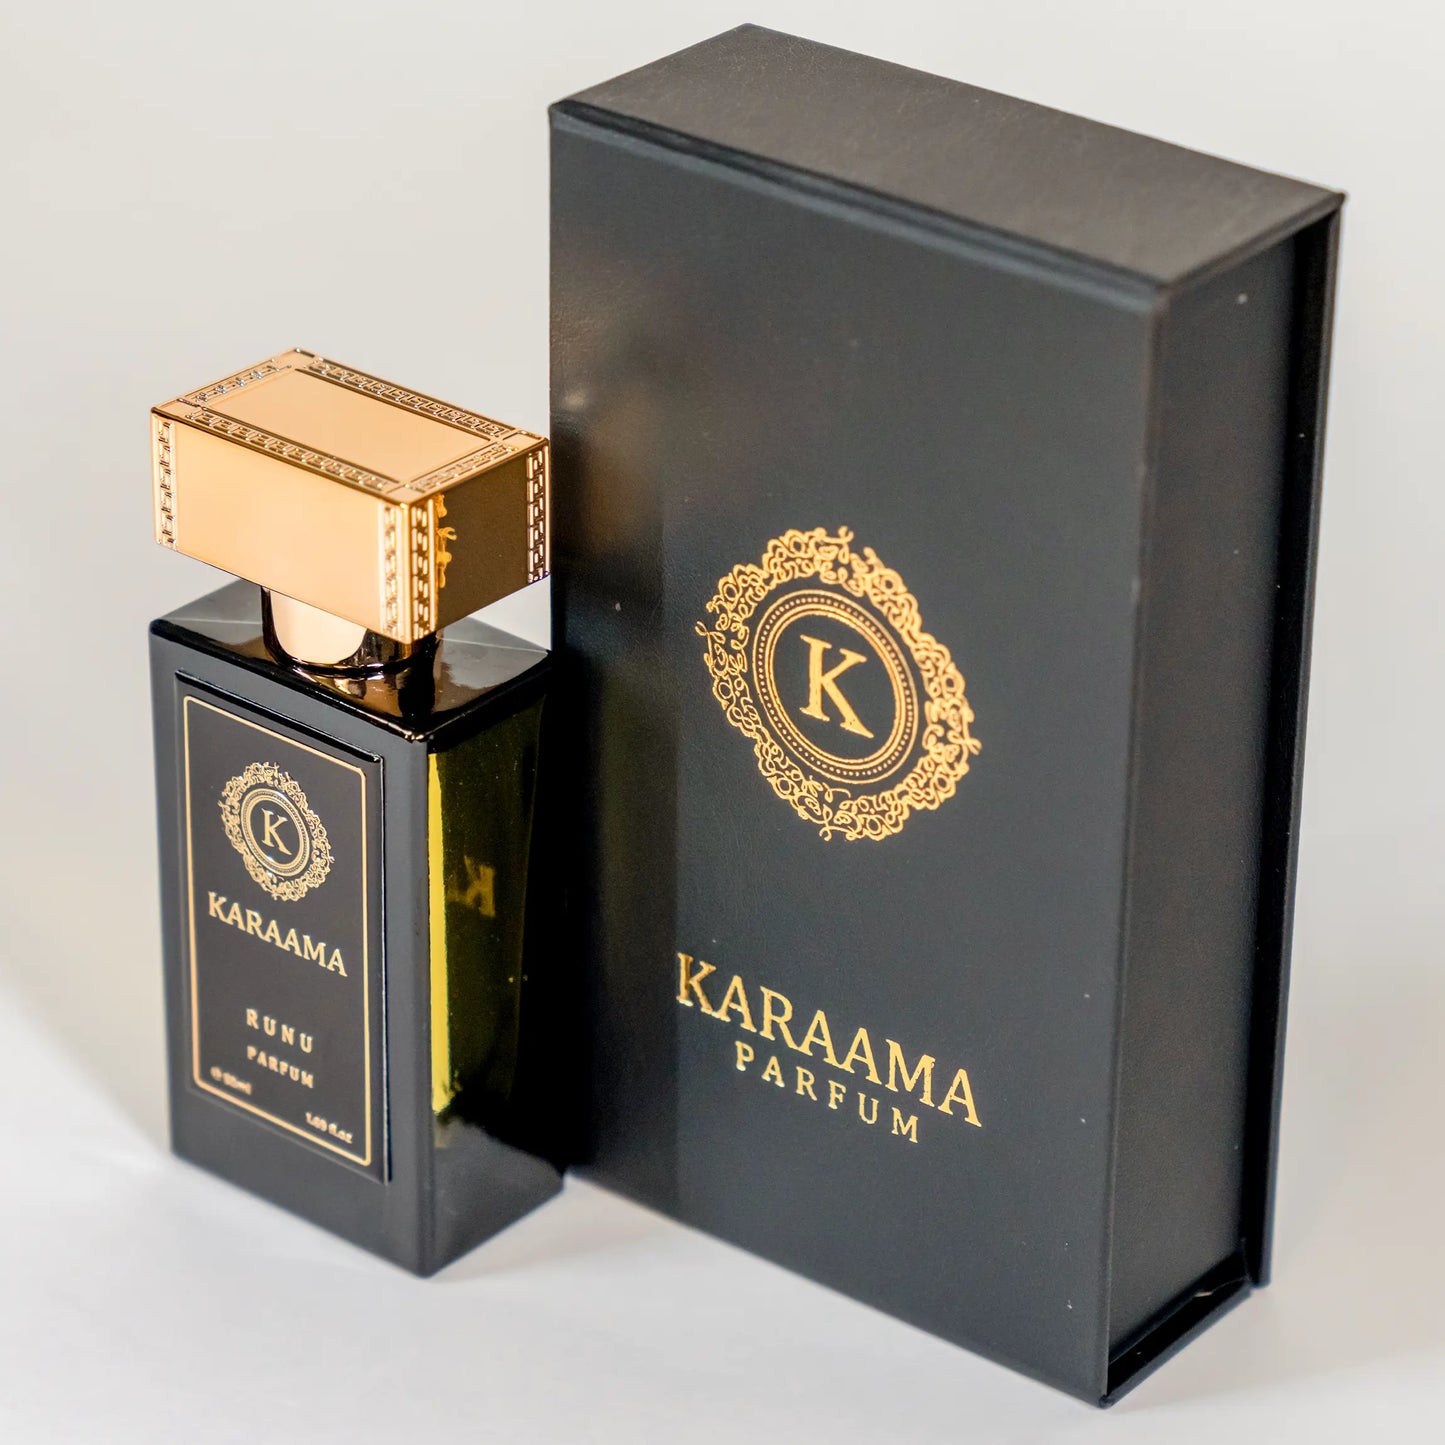 A bottle of Karaama Runu Parfum with a gold lid on a white table. The bottle is 50ml or 1.69 fl oz. [karaama.com]